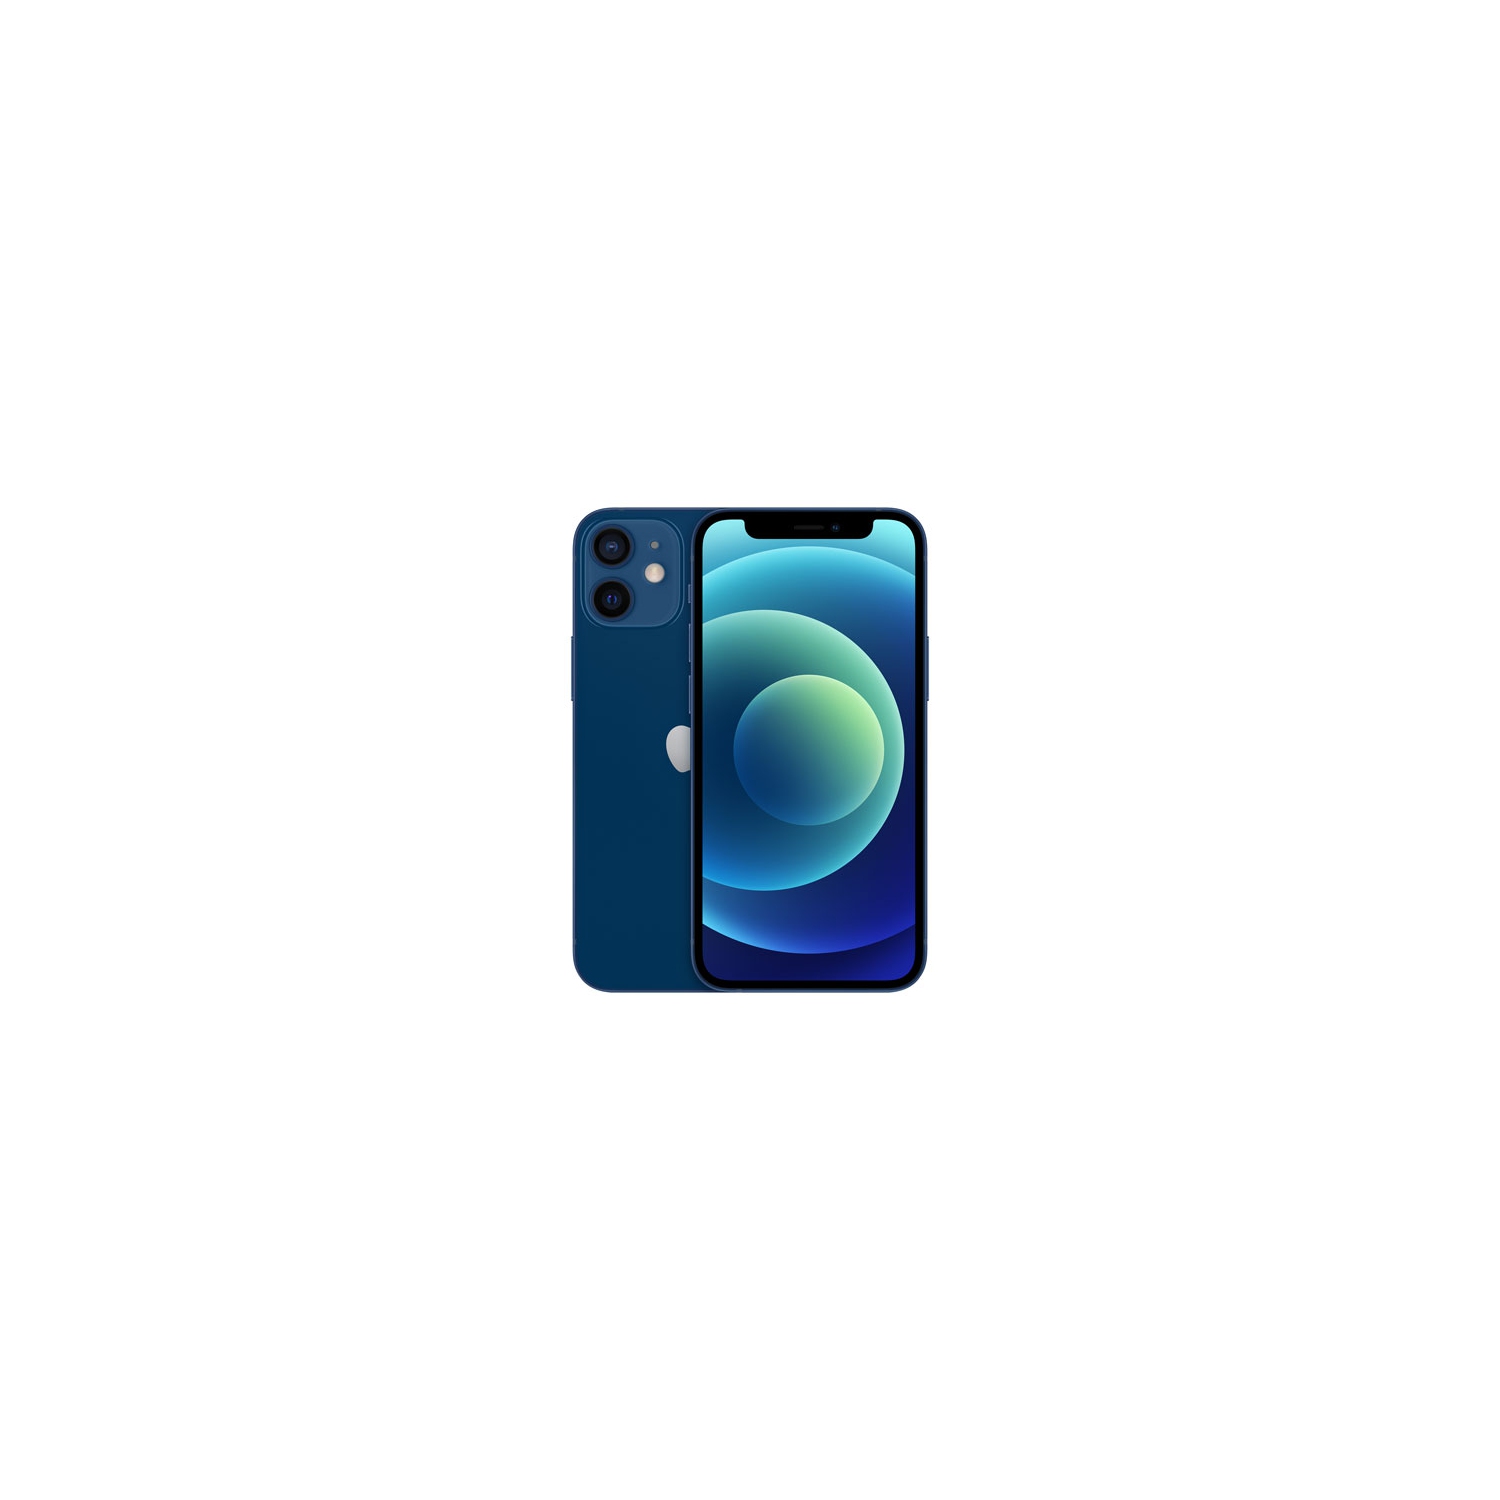 Refurbished (Excellent) - Apple iPhone 12 mini 64GB Smartphone - Blue - Unlocked - Certified Refurbished